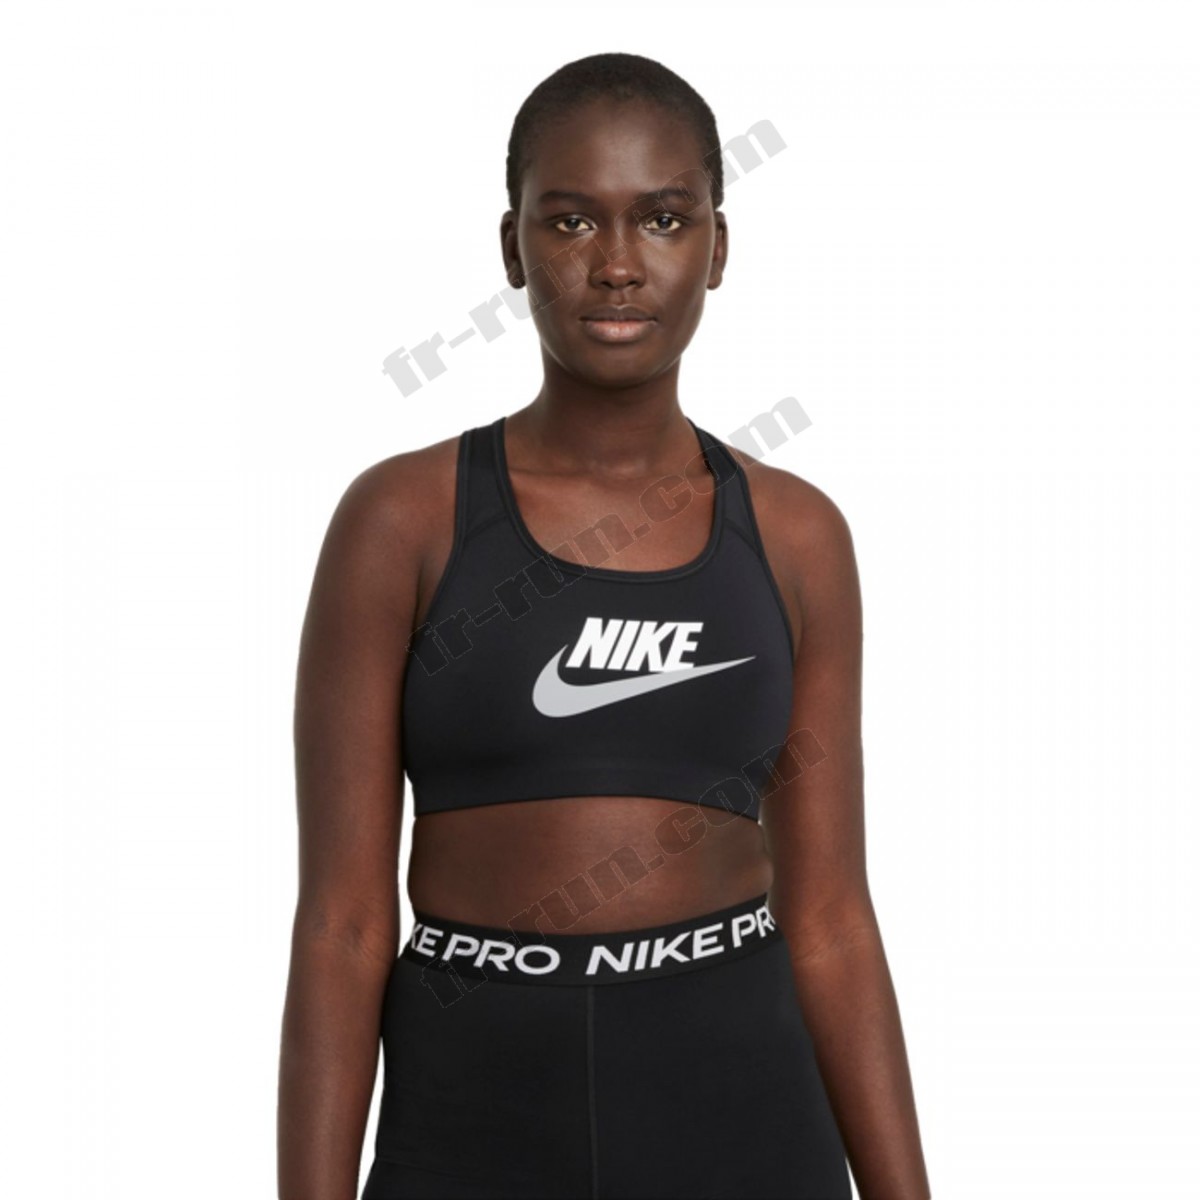 Nike/BRASSIERE Multisport femme NIKE DF SWSH CB FUTURA GX √ Nouveau style √ Soldes - -1